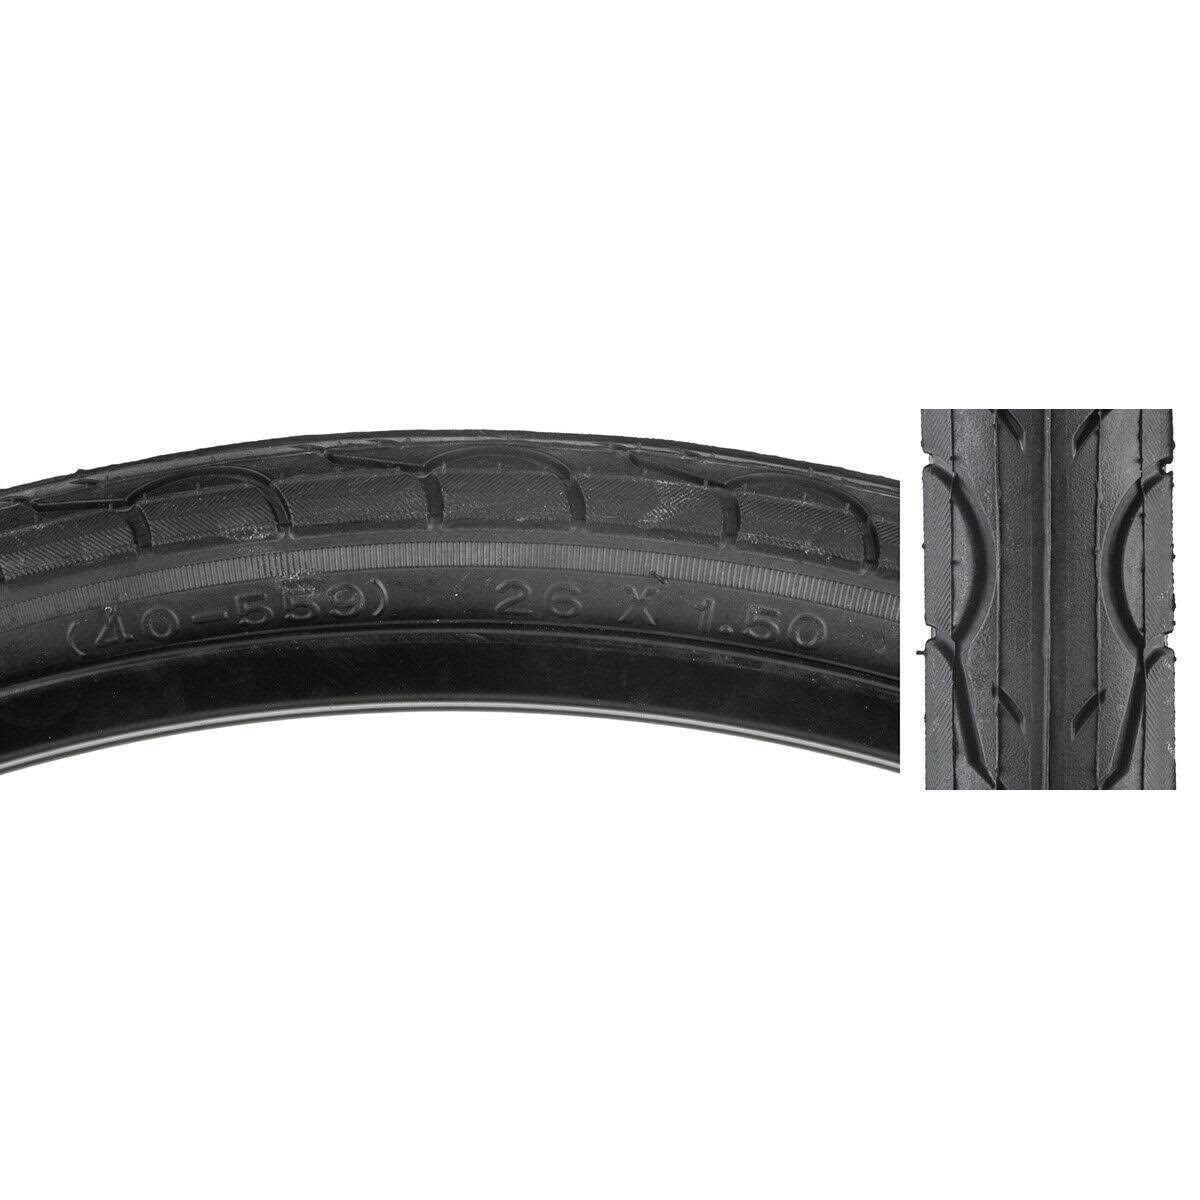 Sunlite Hybrid & Touring Kwest Tires - Black, 26in x 1.5in